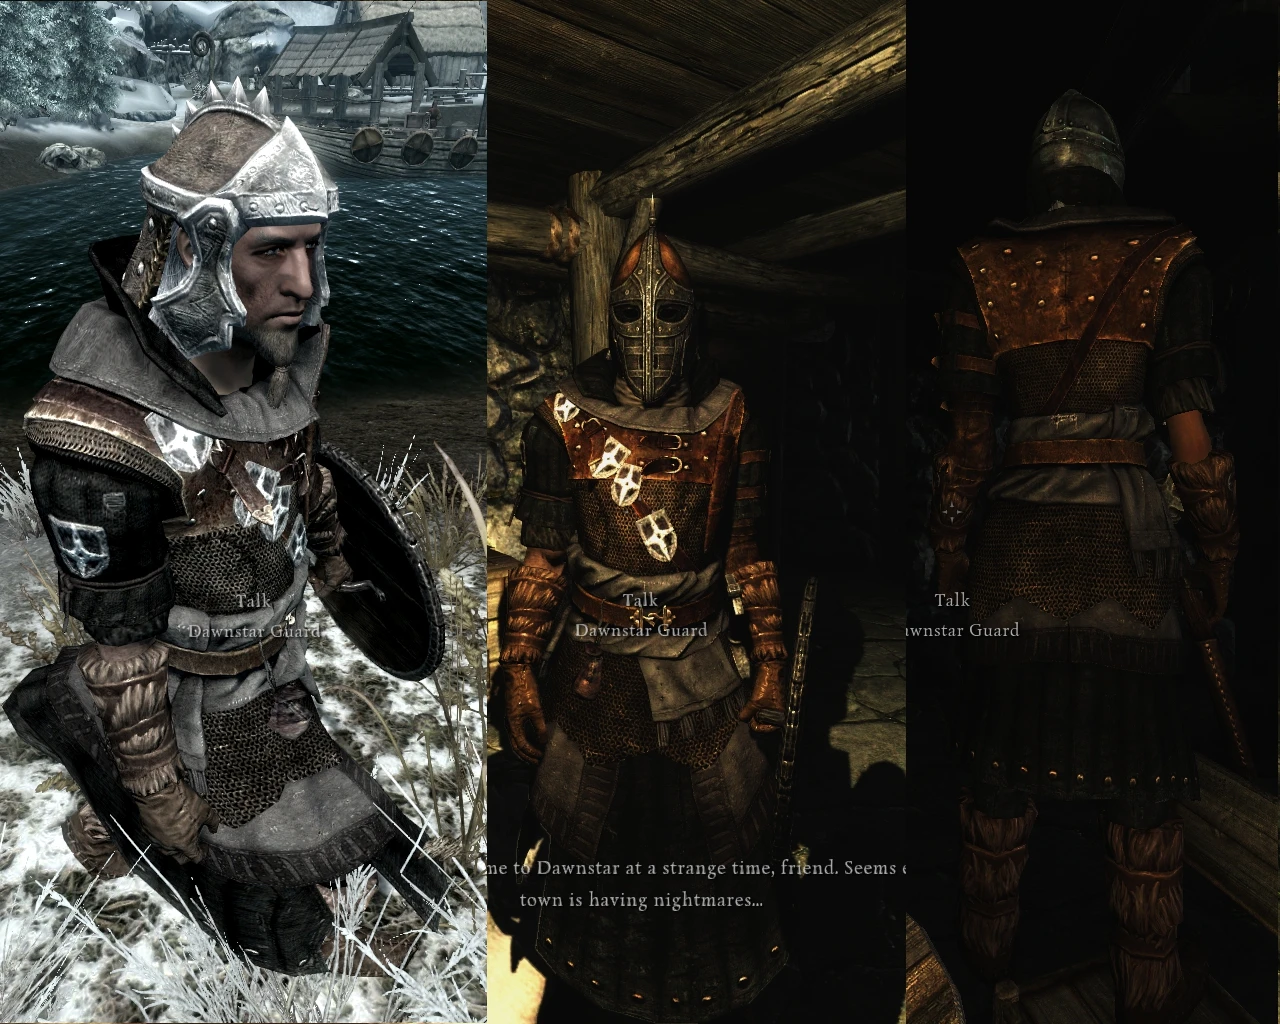 secret armors in skyrim